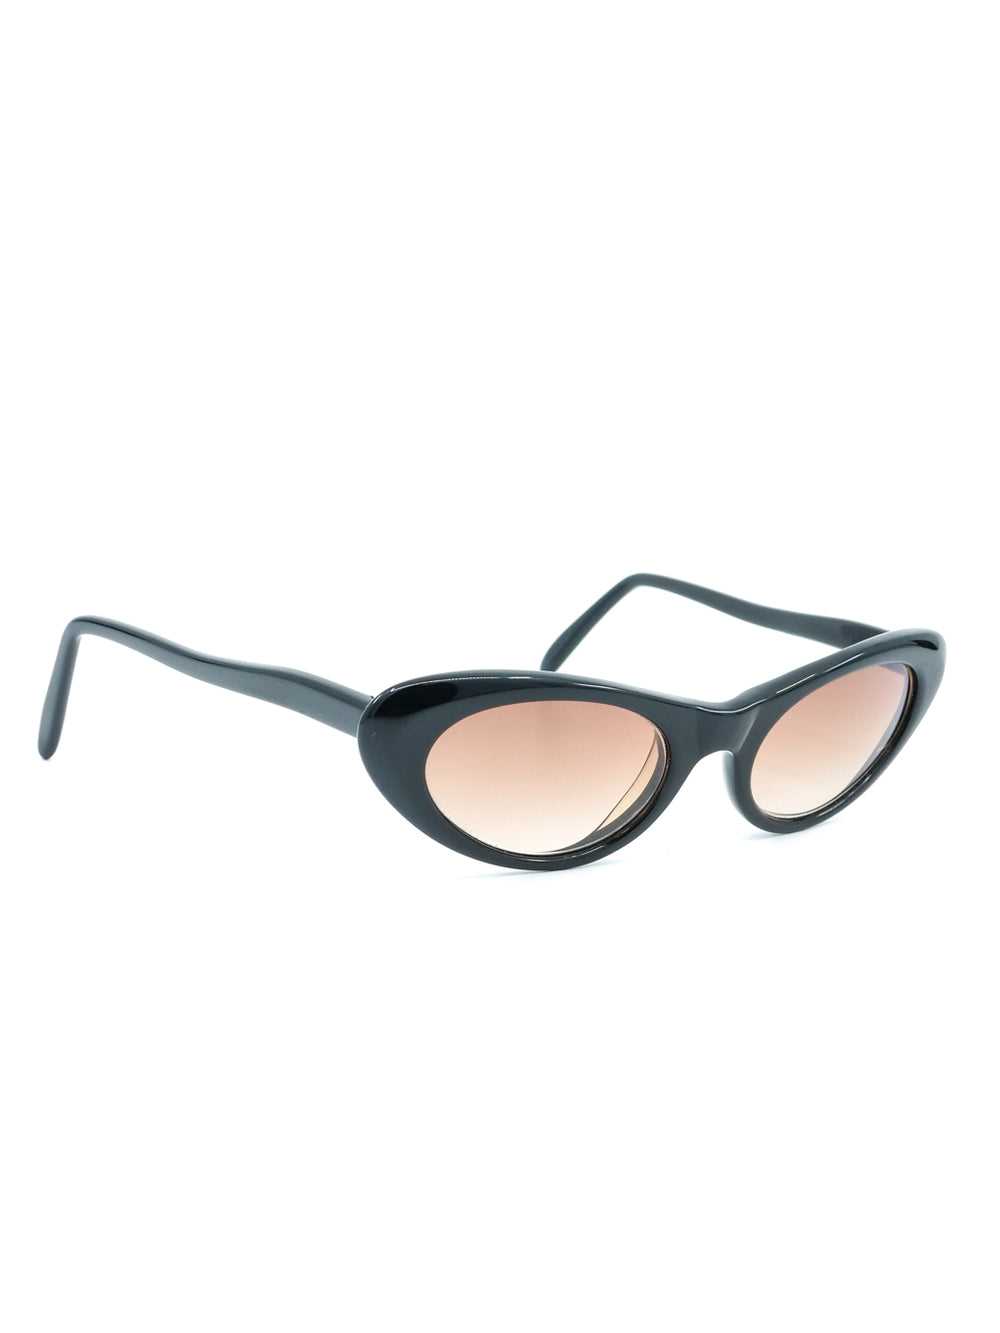 Christian Dior Cateye Sunglasses - image 2